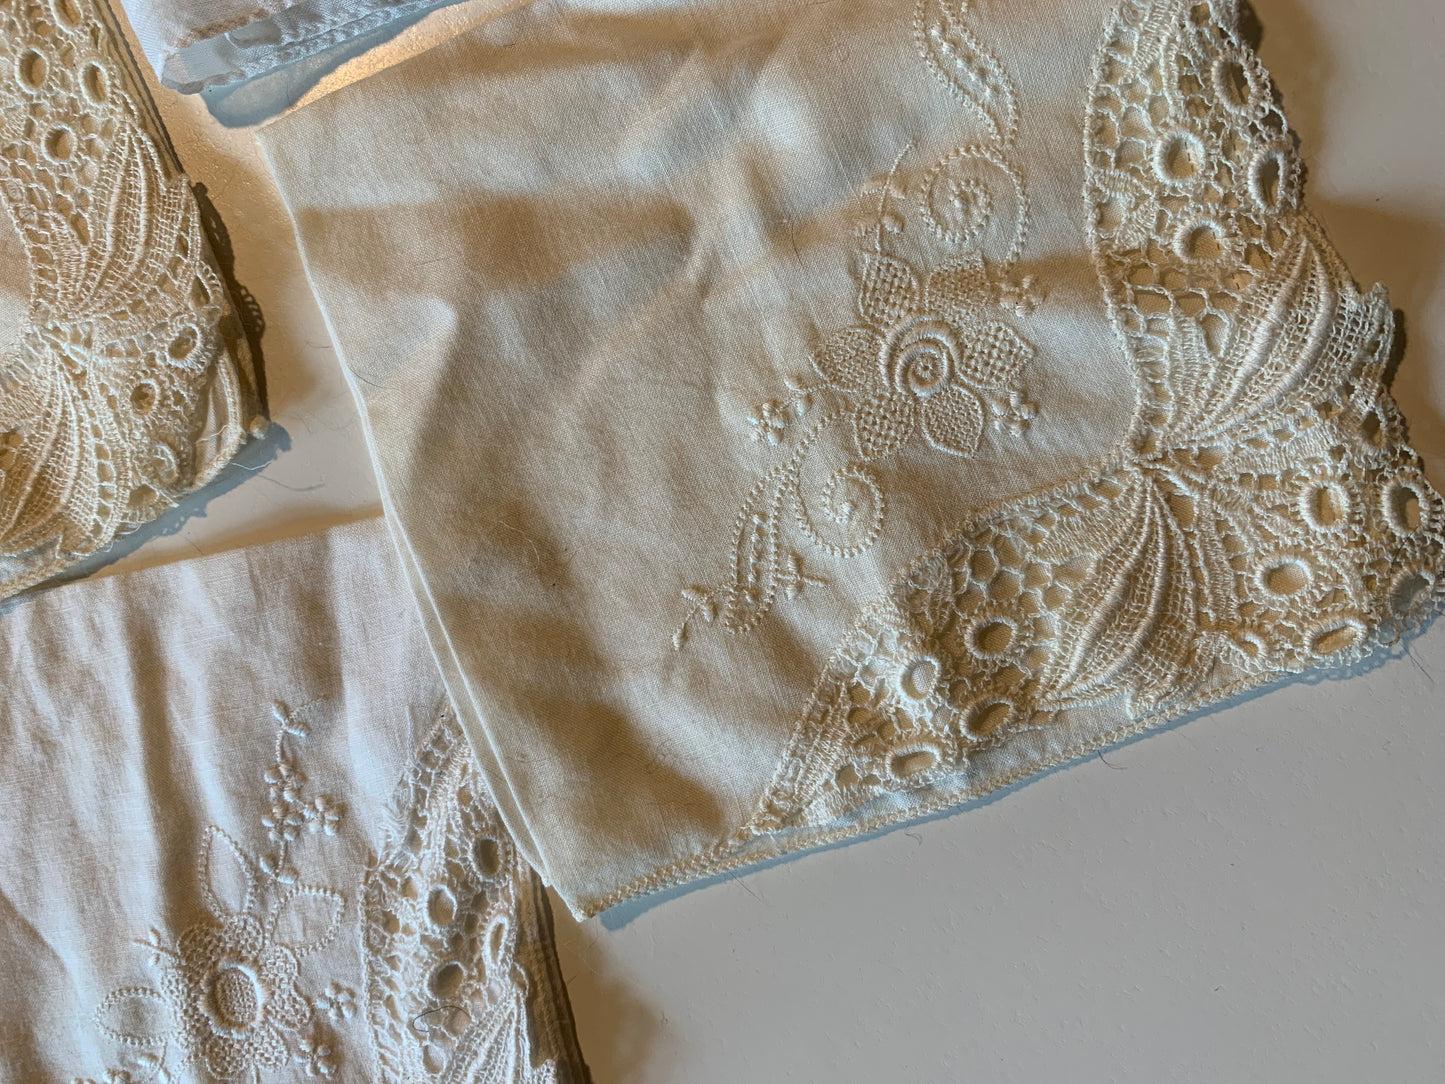 Lot 5 White Lace Trimmed Handkerchiefs circa 1940s